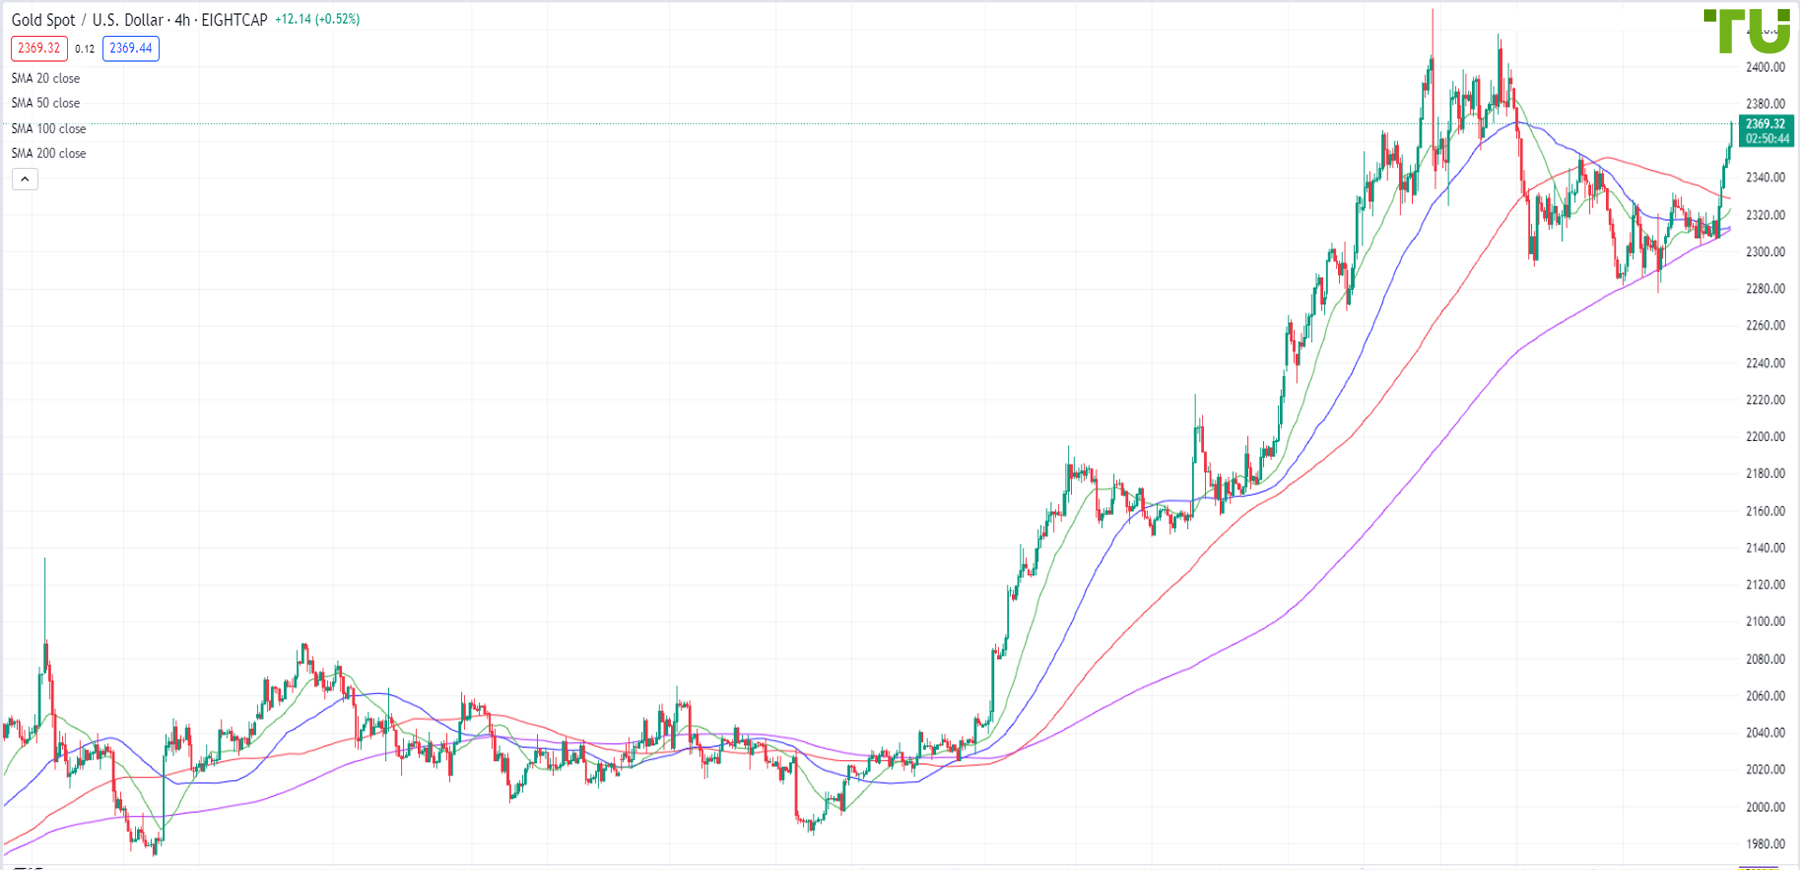 XAU/USD is rising again